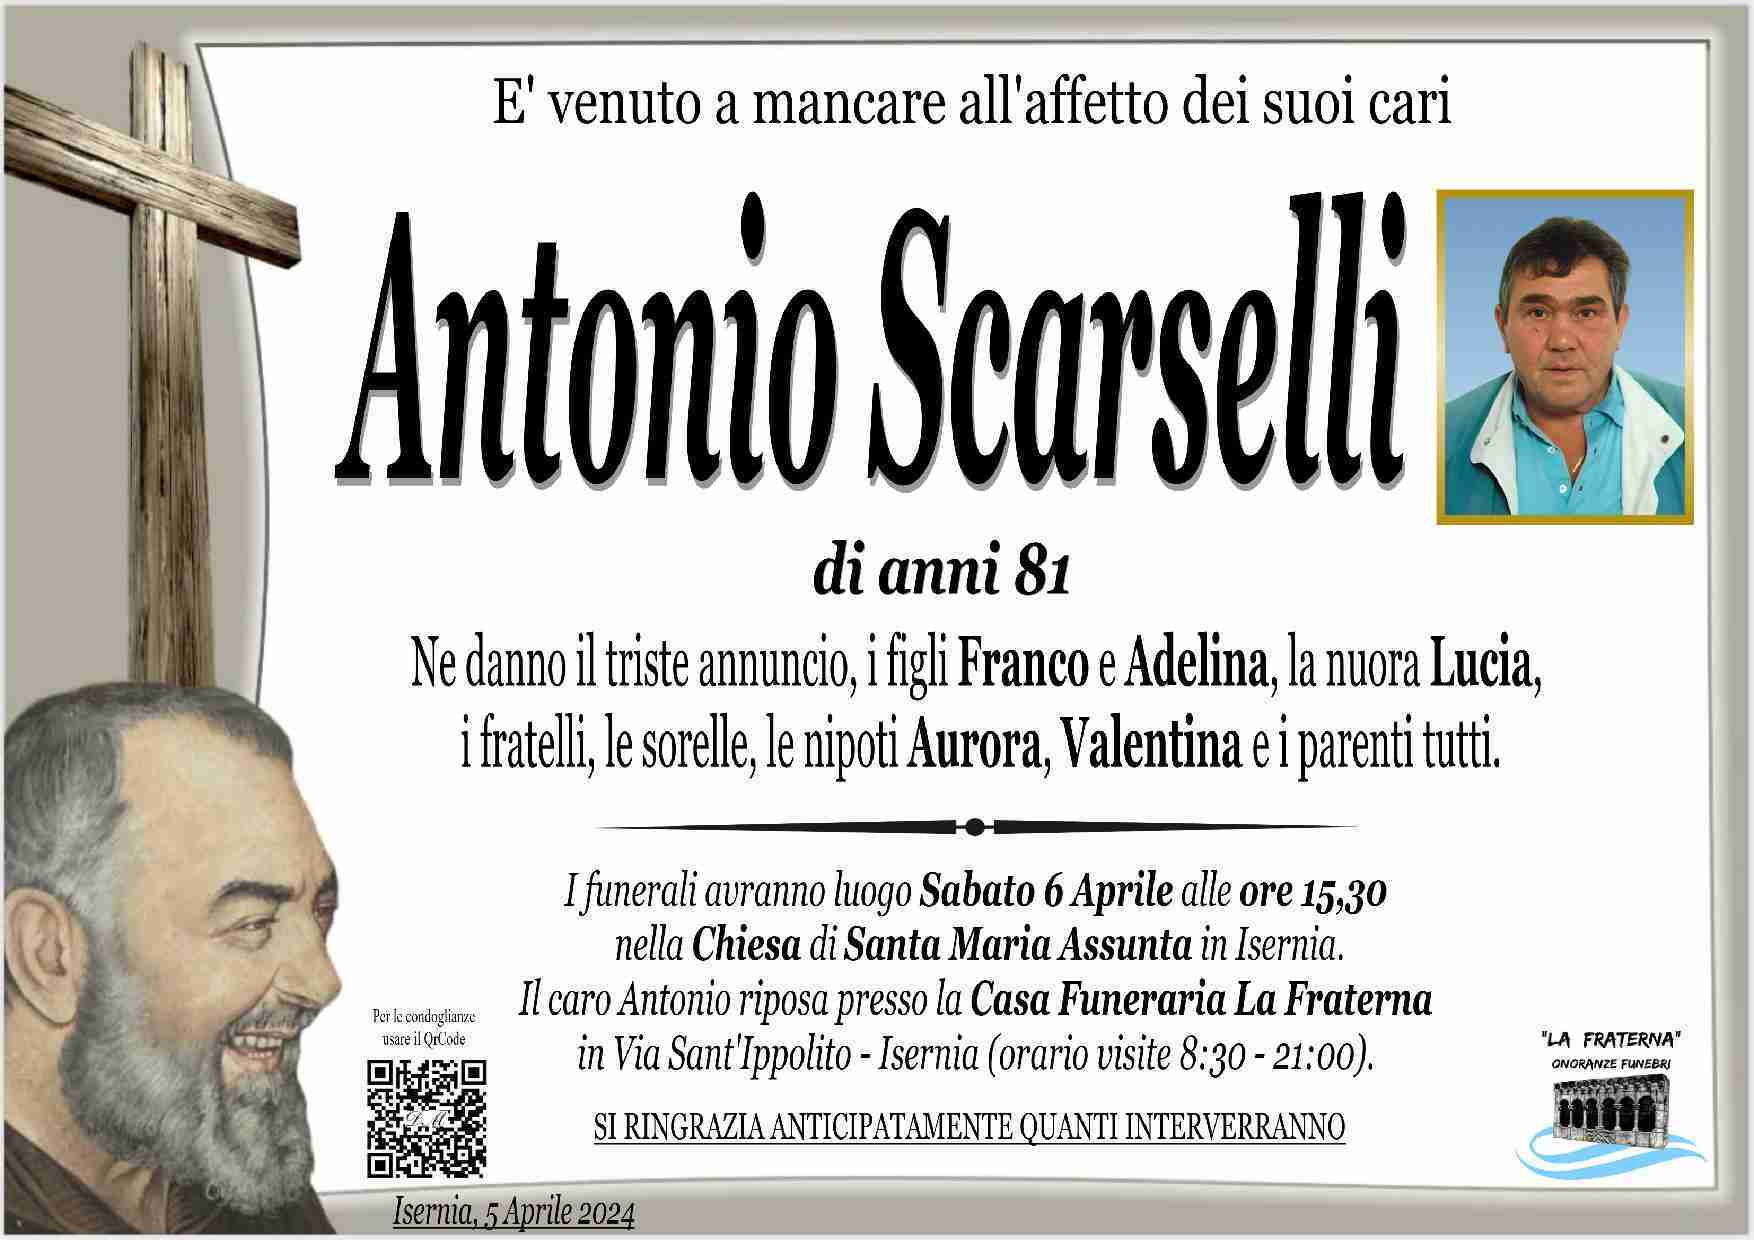 Antonio Scarselli